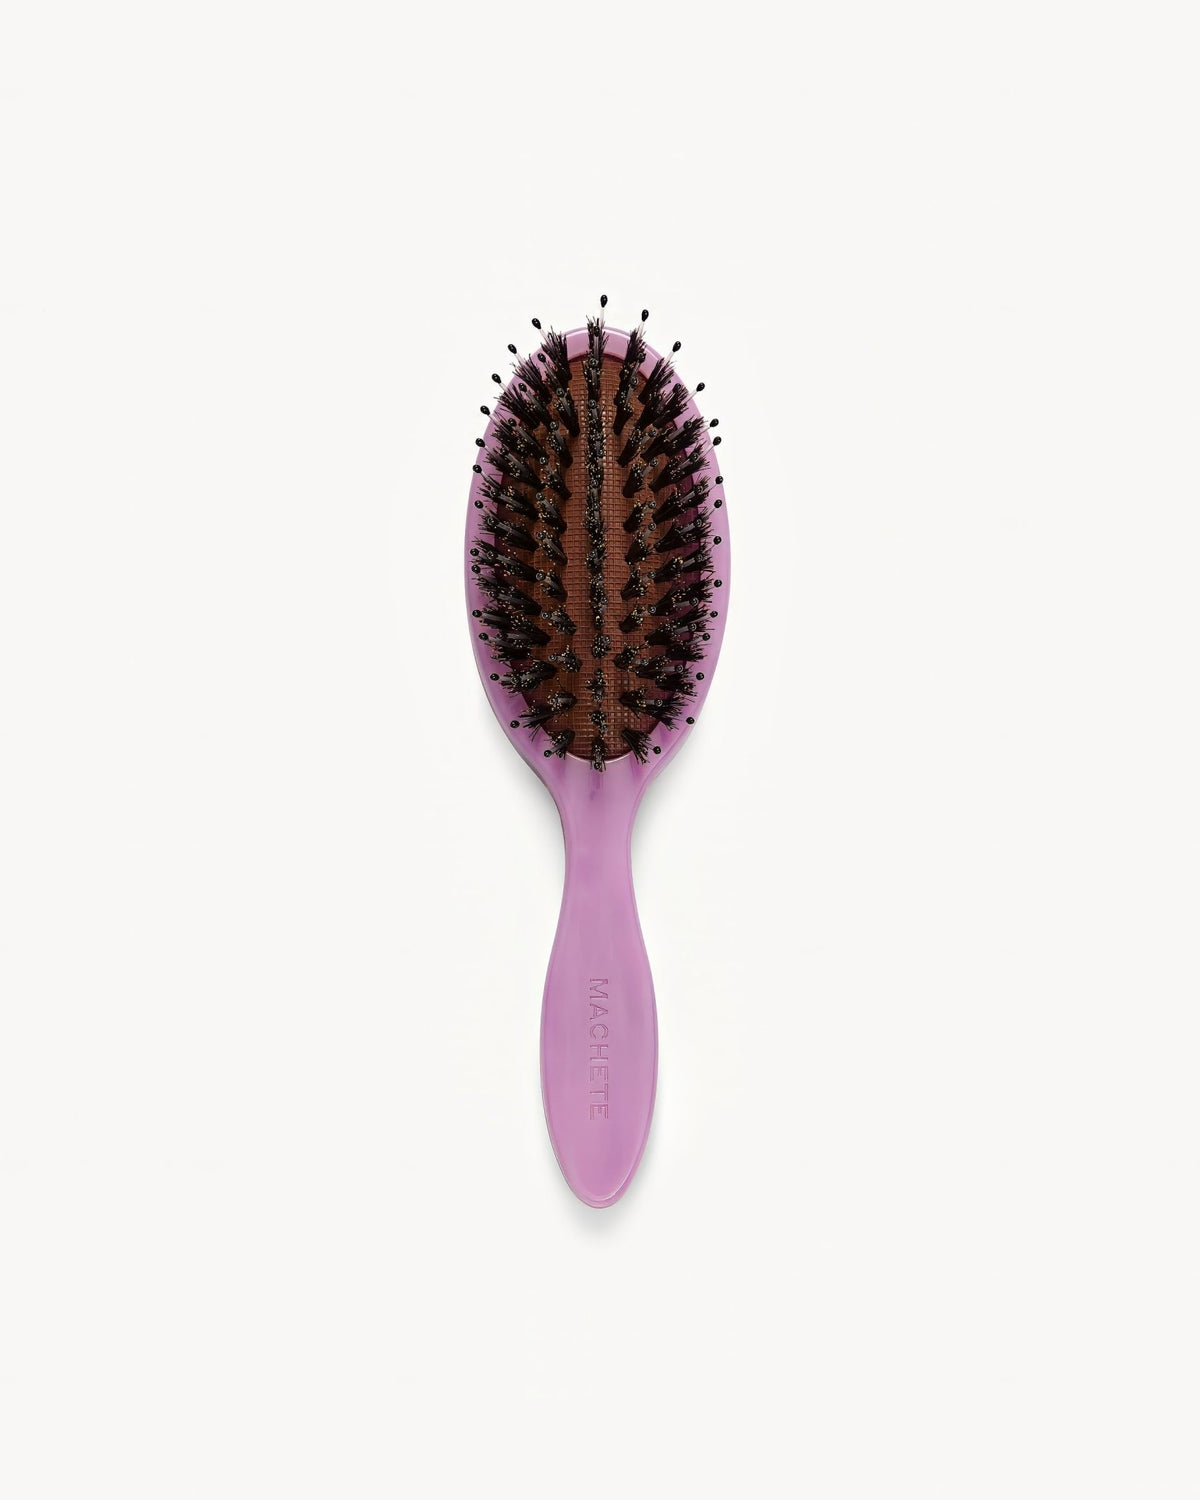 MACHETE Petite Travel Hair Brush in Orchid